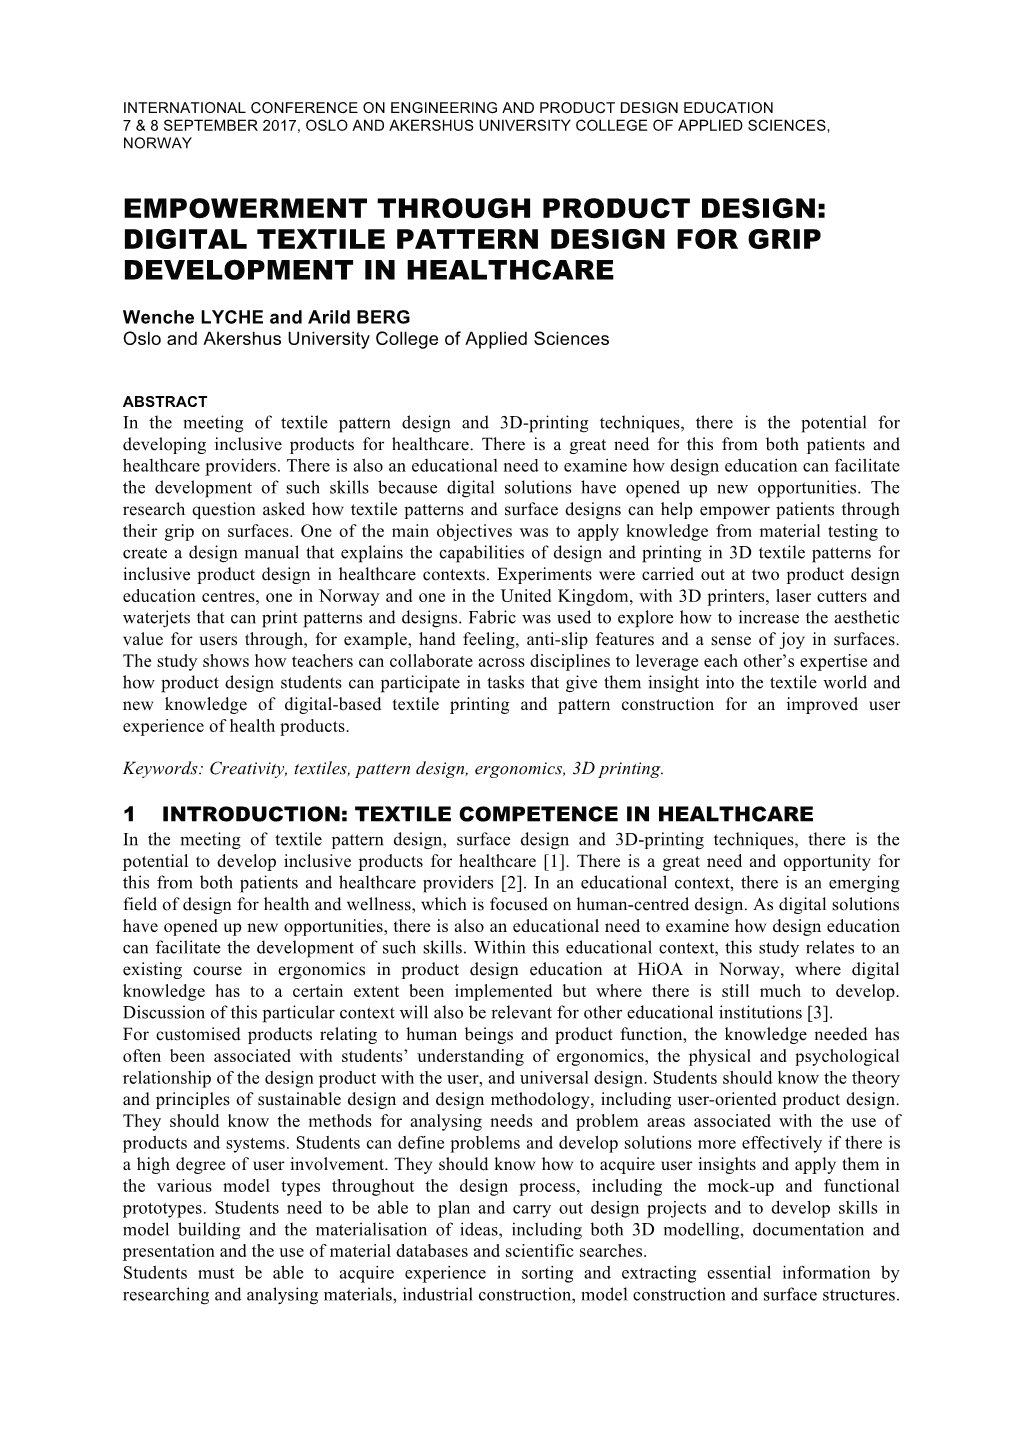 Digital Textile Pattern Design for Grip Development in Healthcare